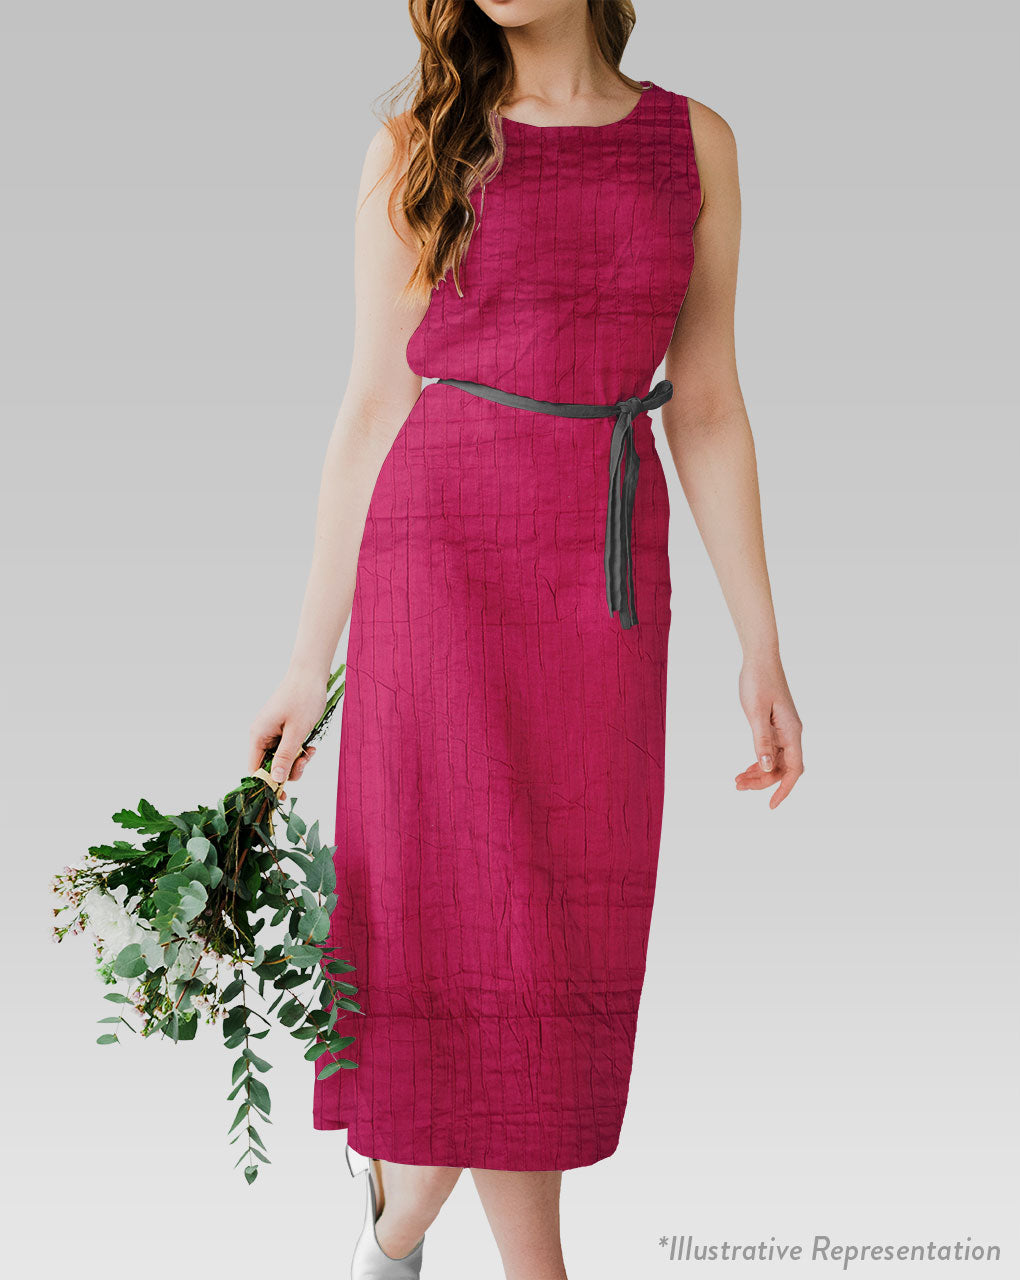 Fuchsia Pin-Tucks Rayon Fabric ( Width 36 Inch ) - Fabriclore.com